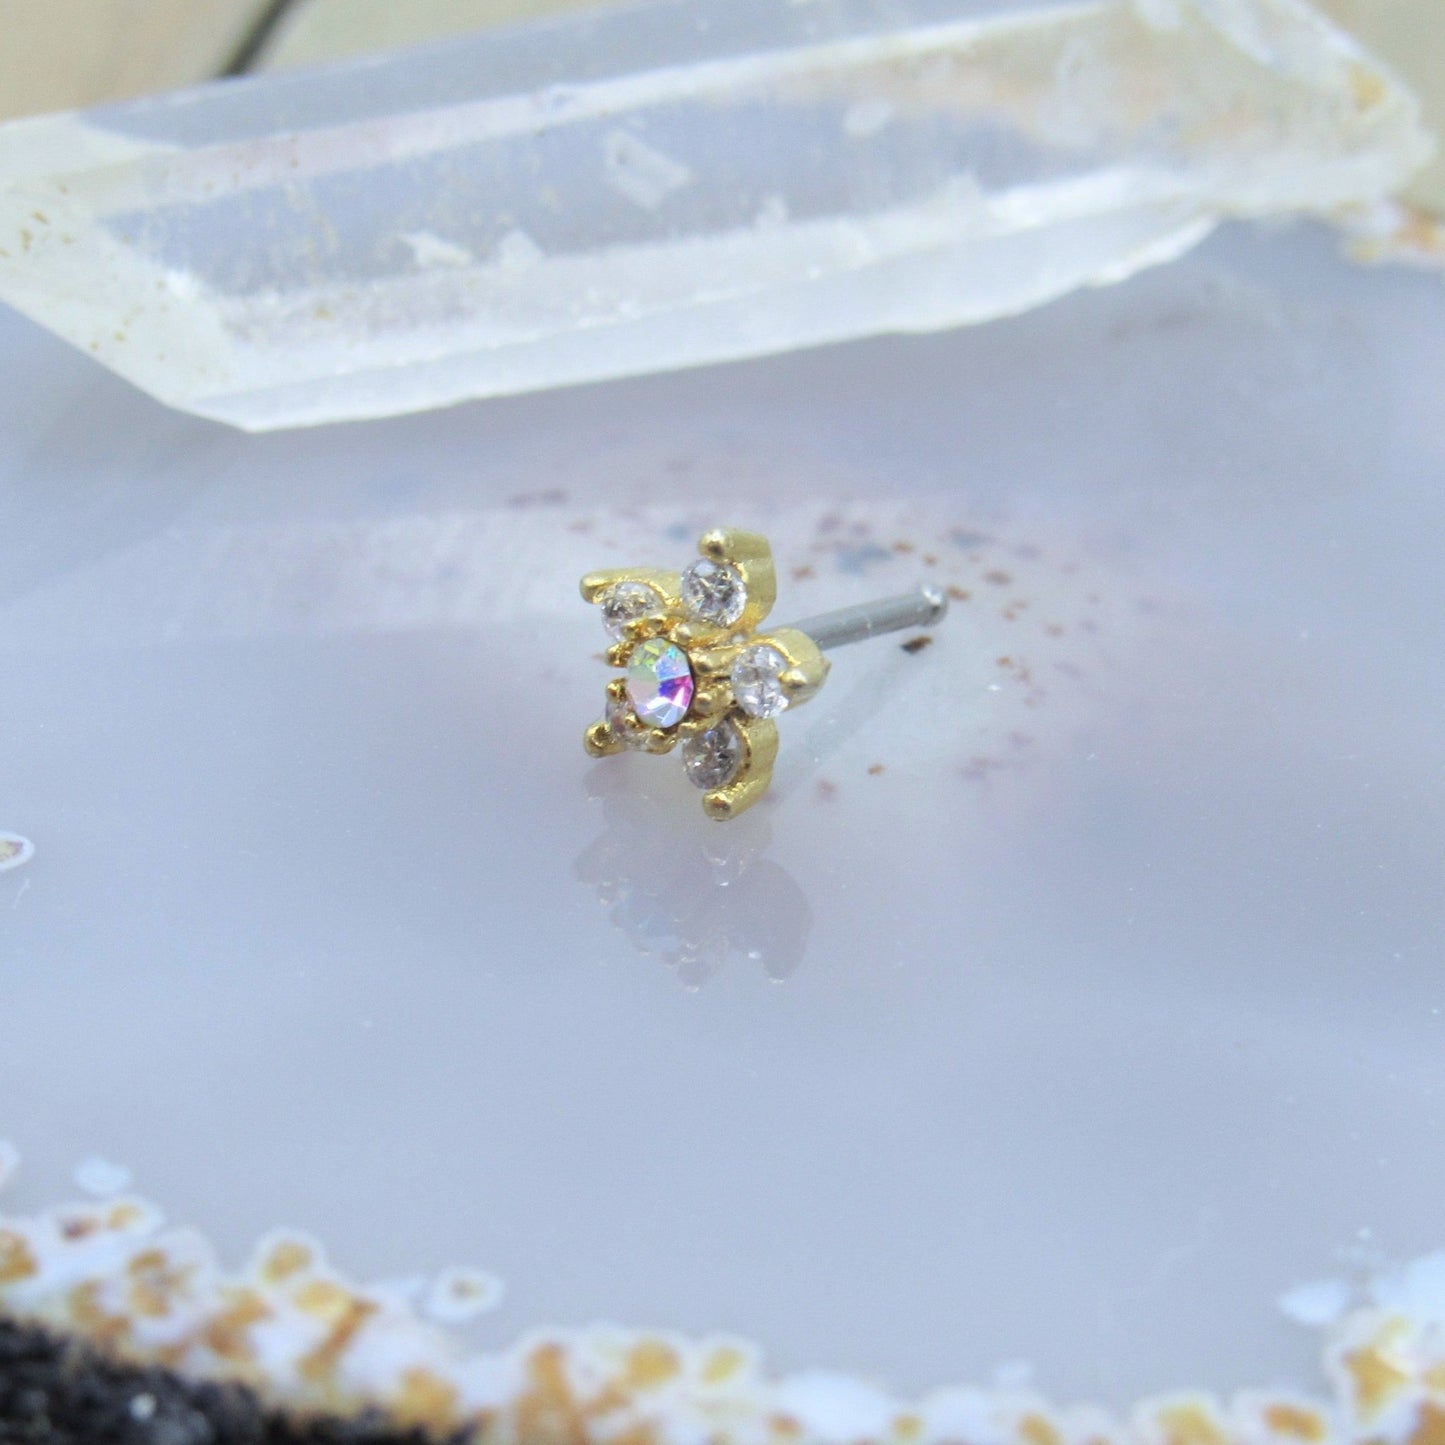 Gold flower nose piercing stud ring 20g aurora borealis cz press fit gemstones - Siren Body Jewelry